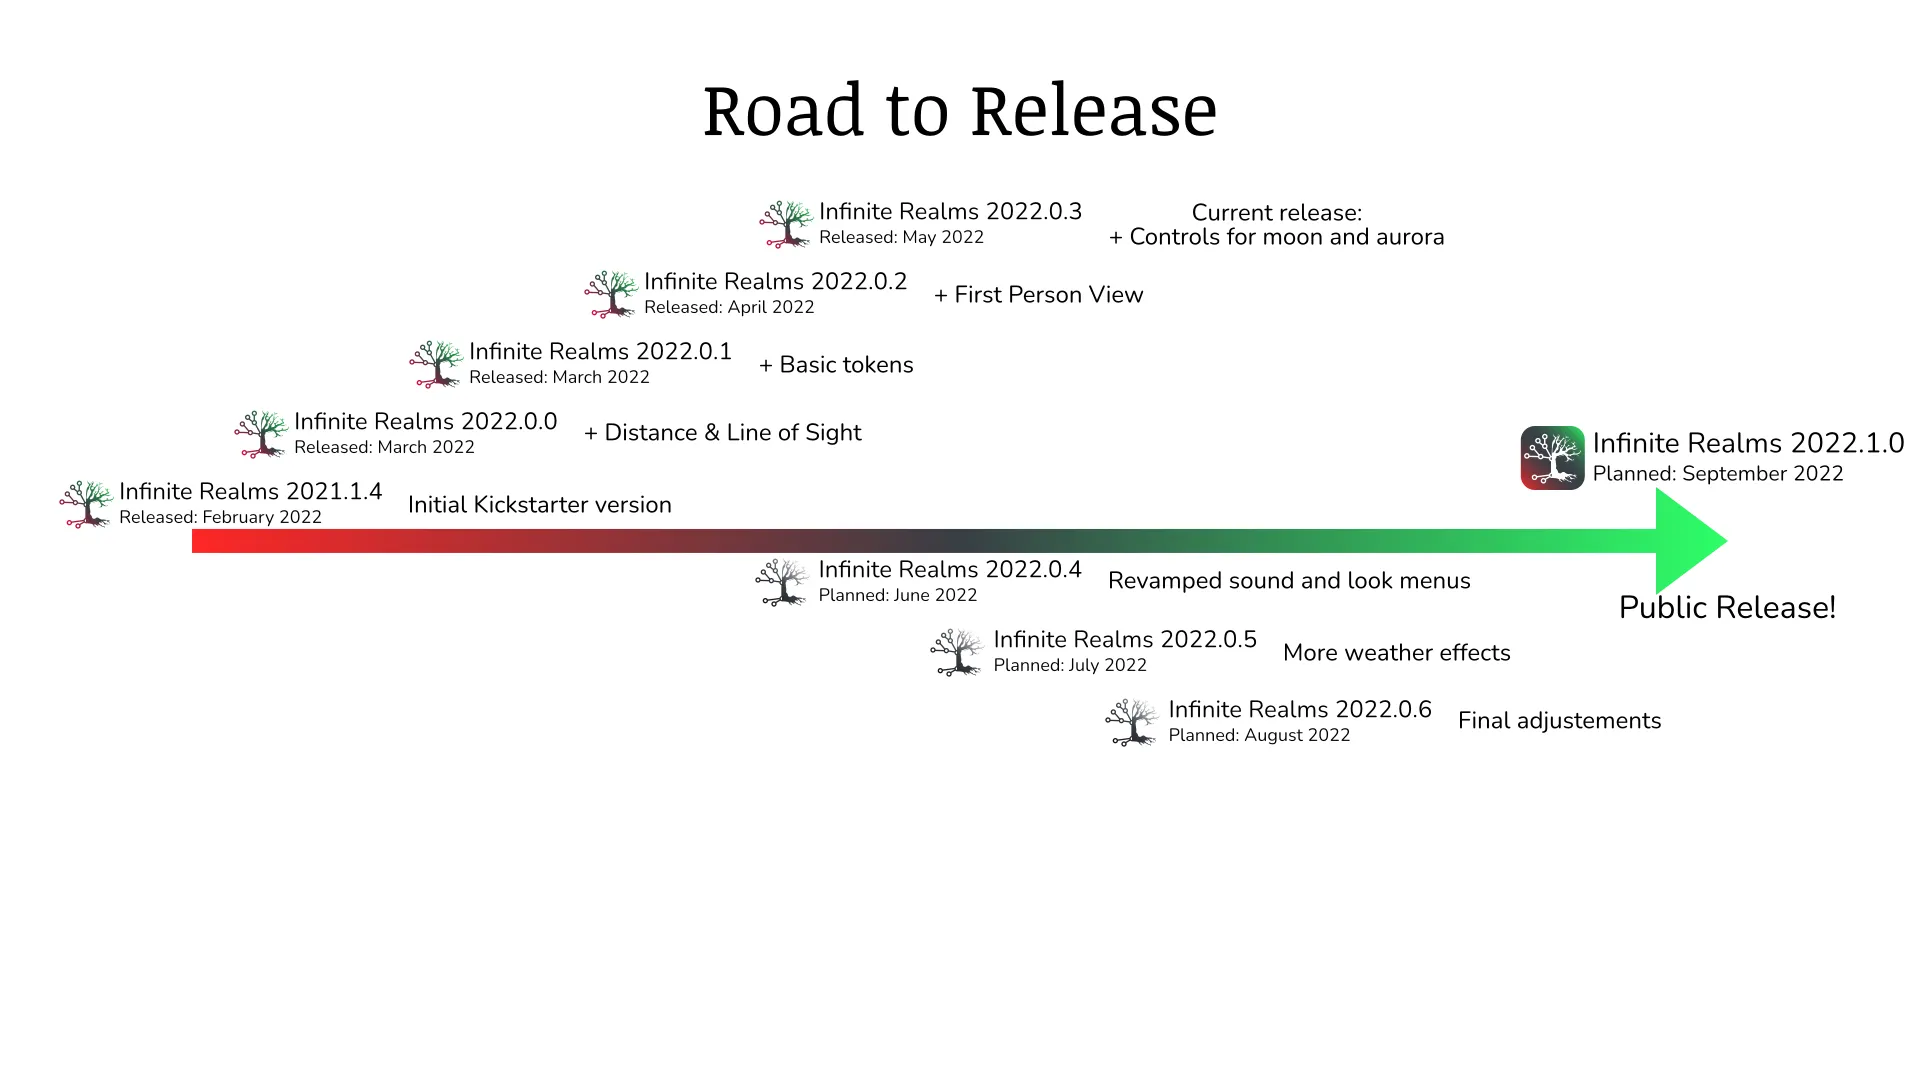 Roadmap to Release June 2022